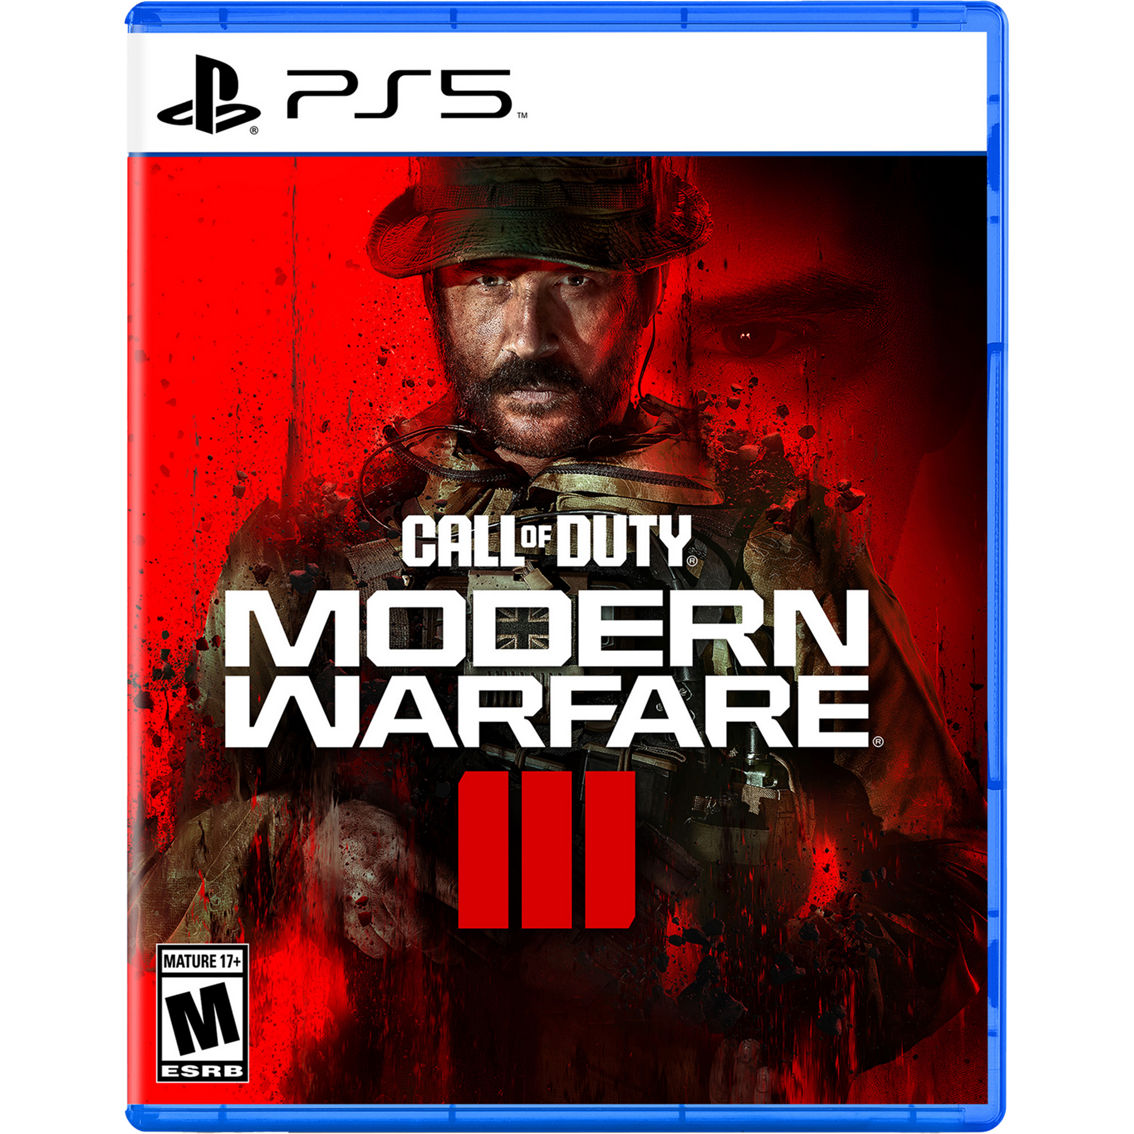 Call of Duty Modern Warfare III (PS5) - Image 1 of 6